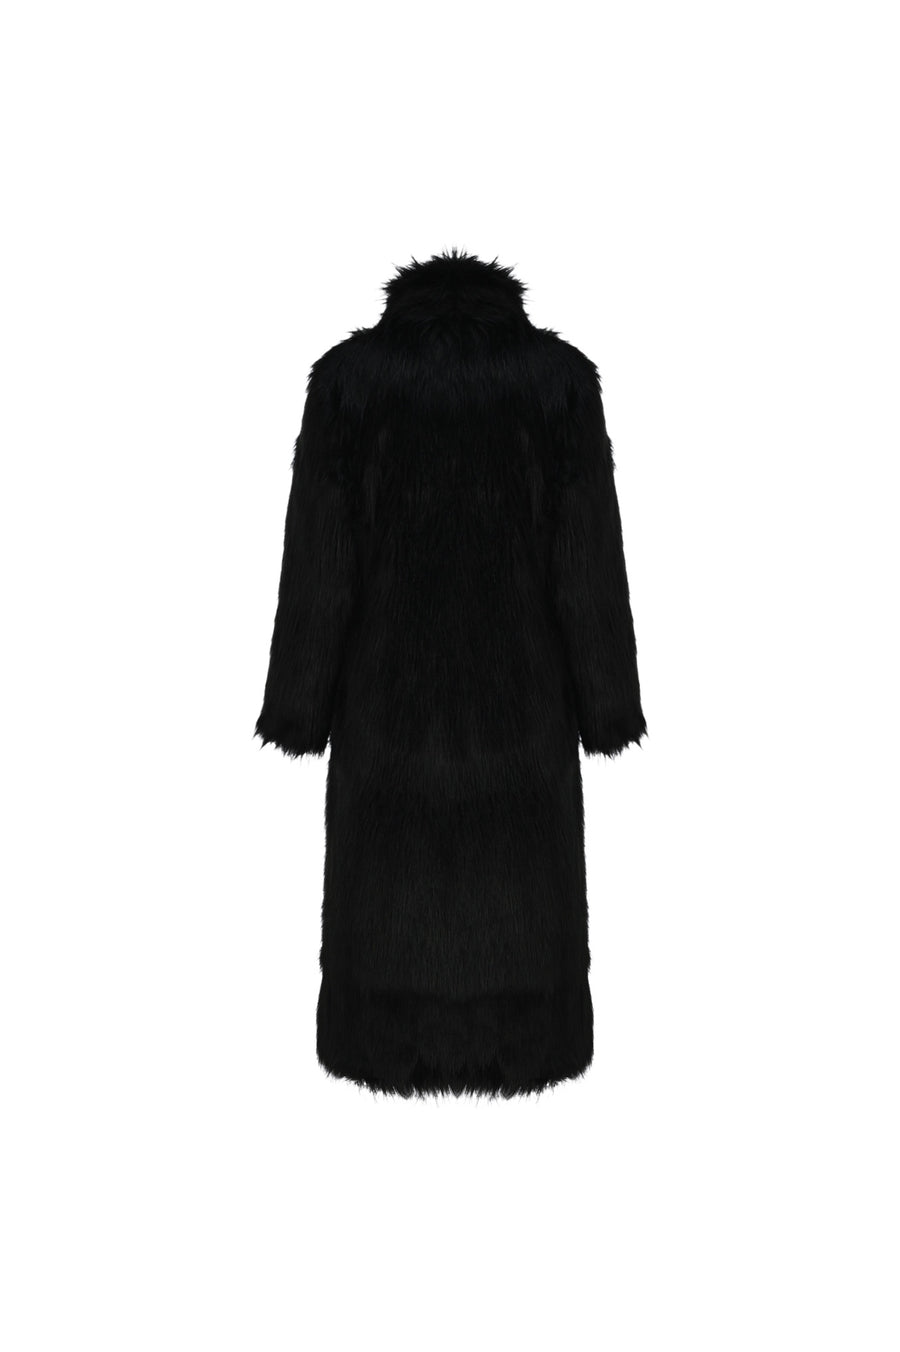 The Lya onyx black maxi faux fur